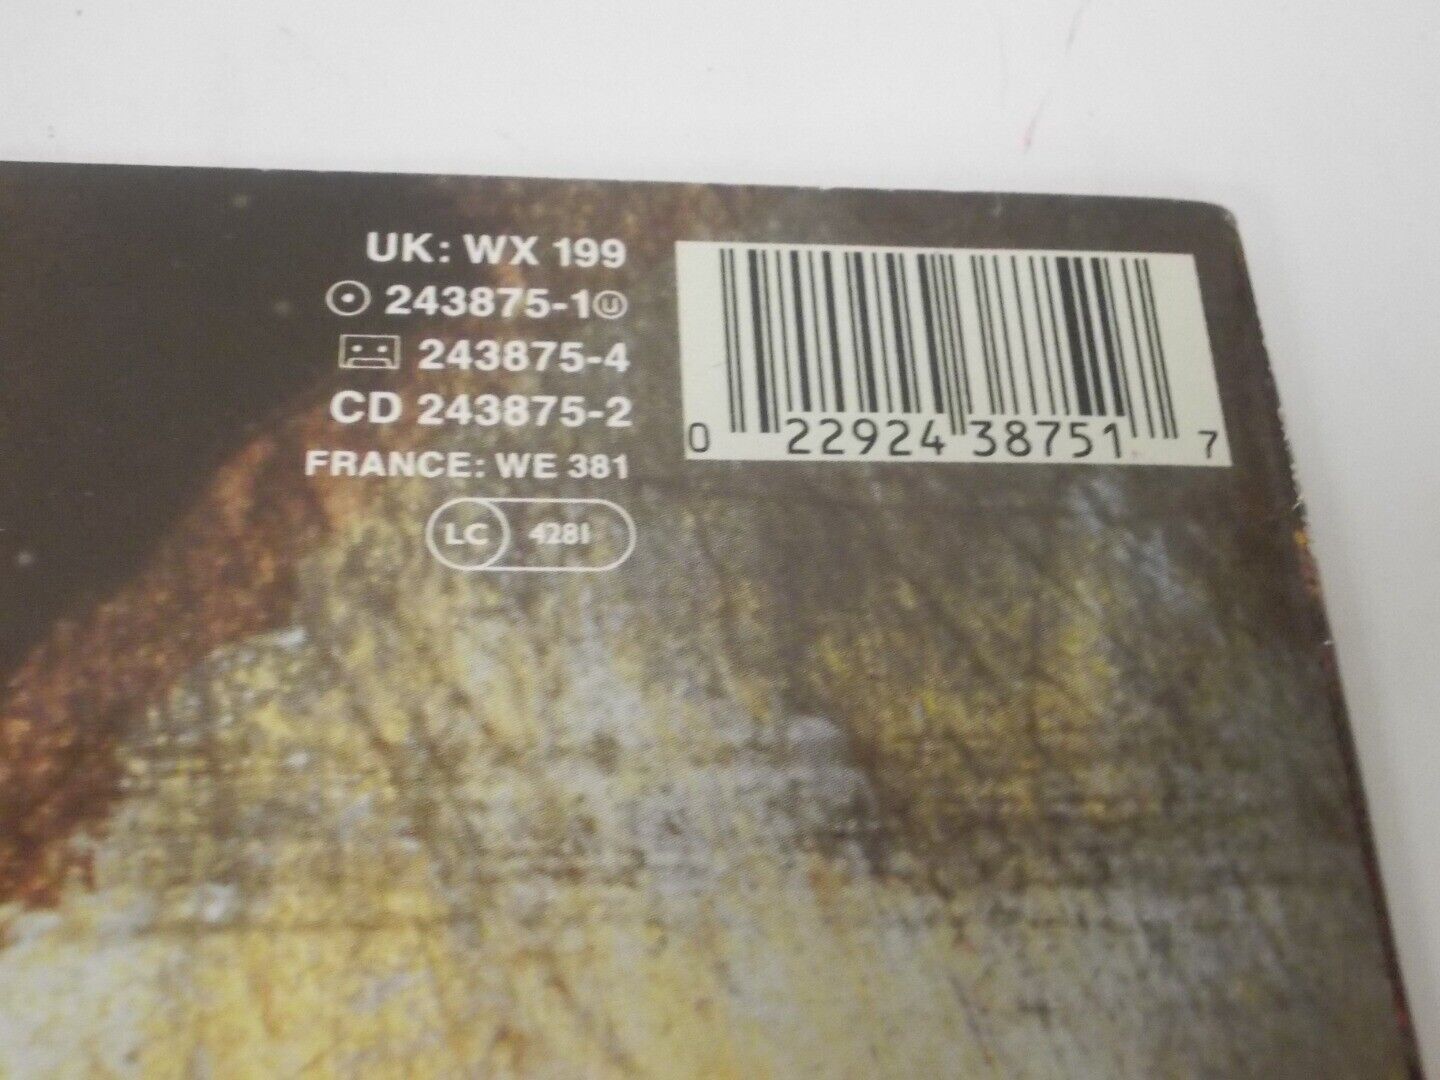 Enya Watermark Vinyl Record UK: WX 199 243875 243875-4 243875-2 WE 381 LG 4281